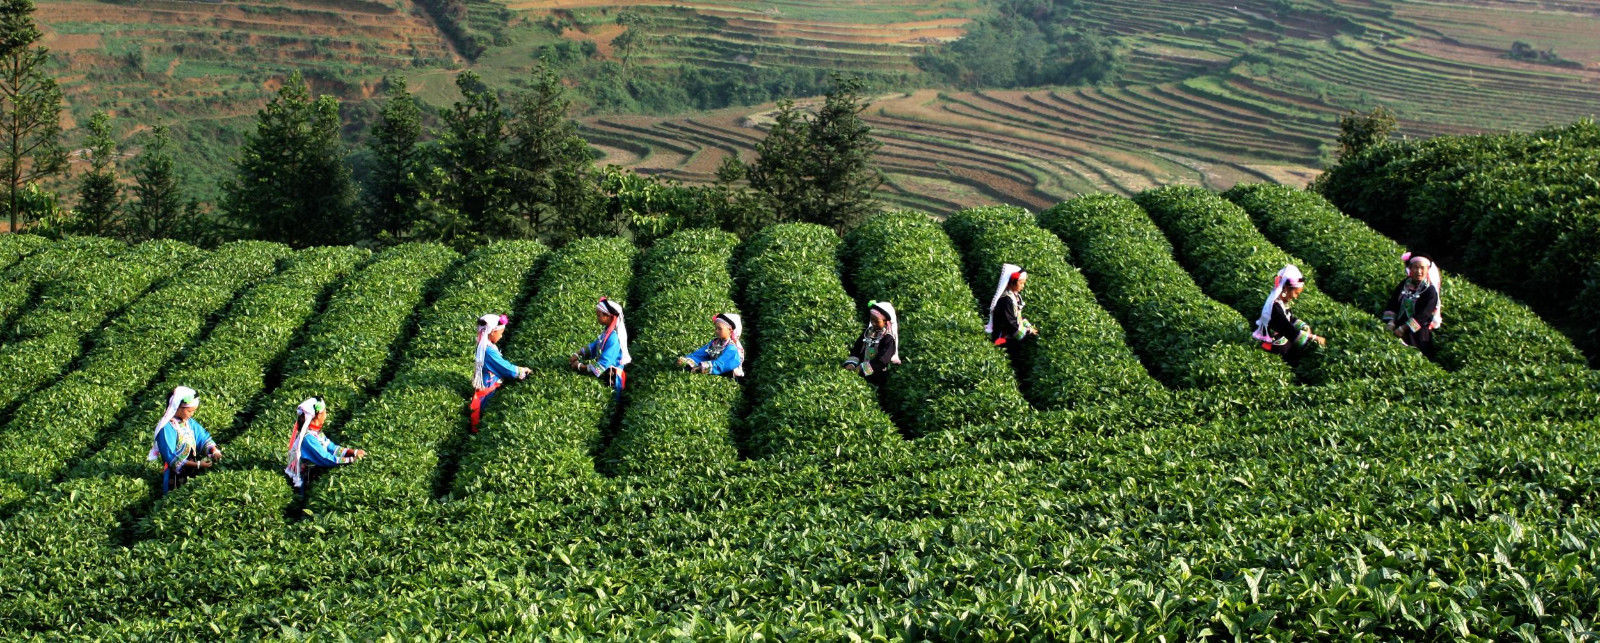 HelloYoungPromotion 250g Milk Oolong Tea High Quality Tie guan yin Health Care Green Tea